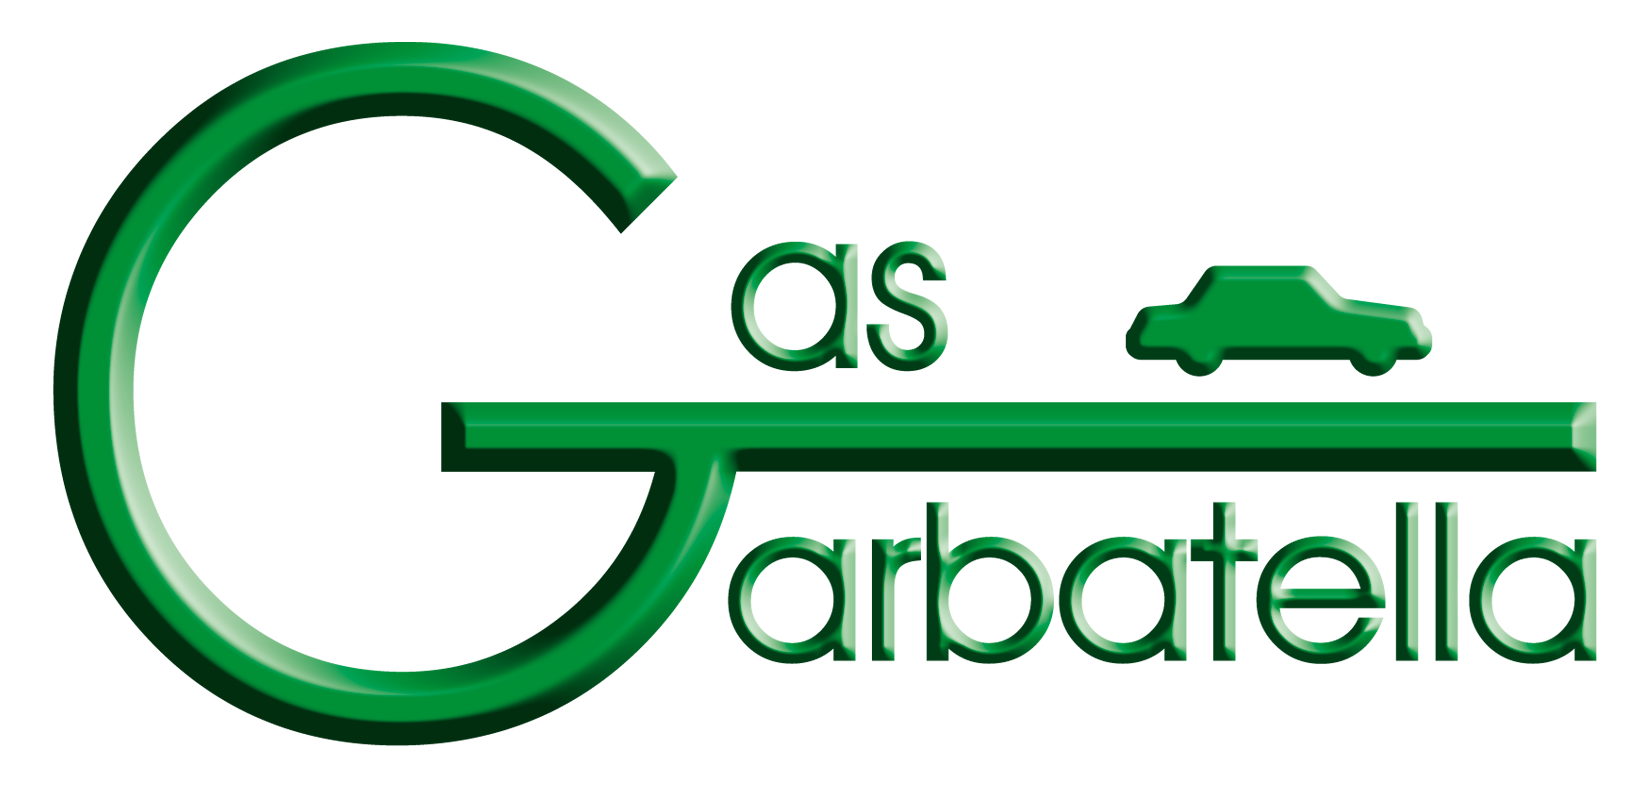 (c) Gasgarbatella.it